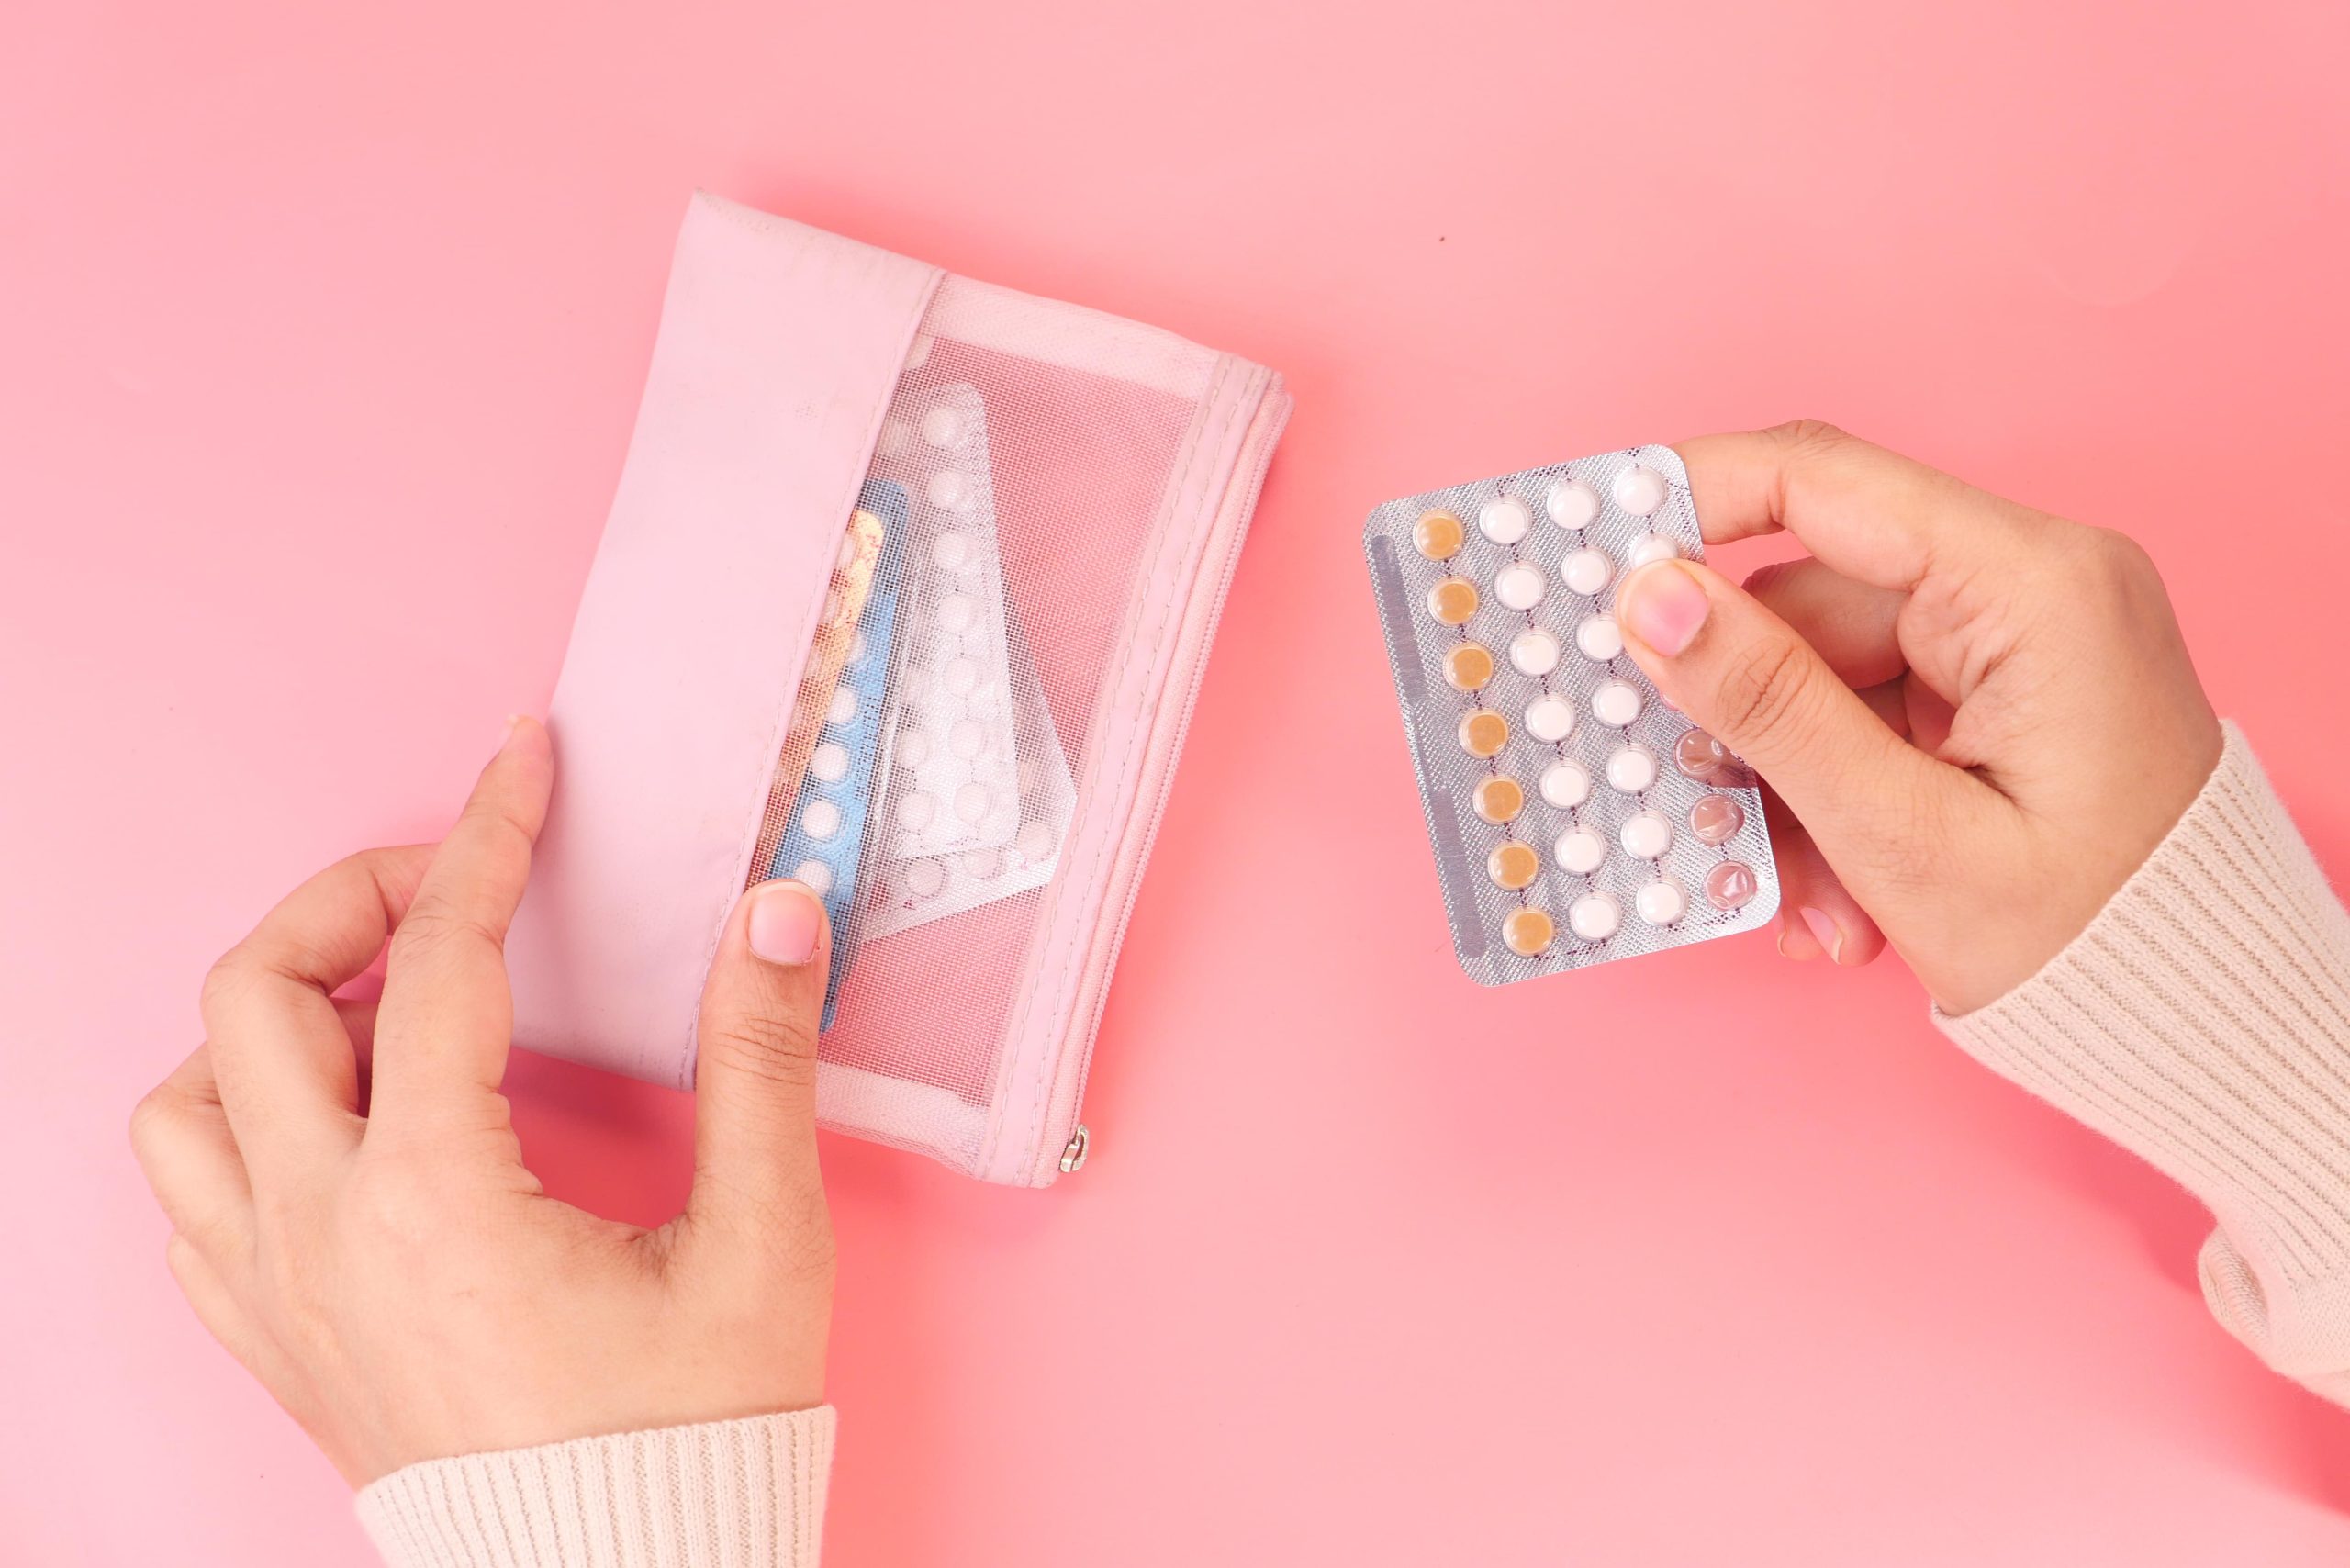 teva-labchile-musa-blog-pastillas-anticonceptivas